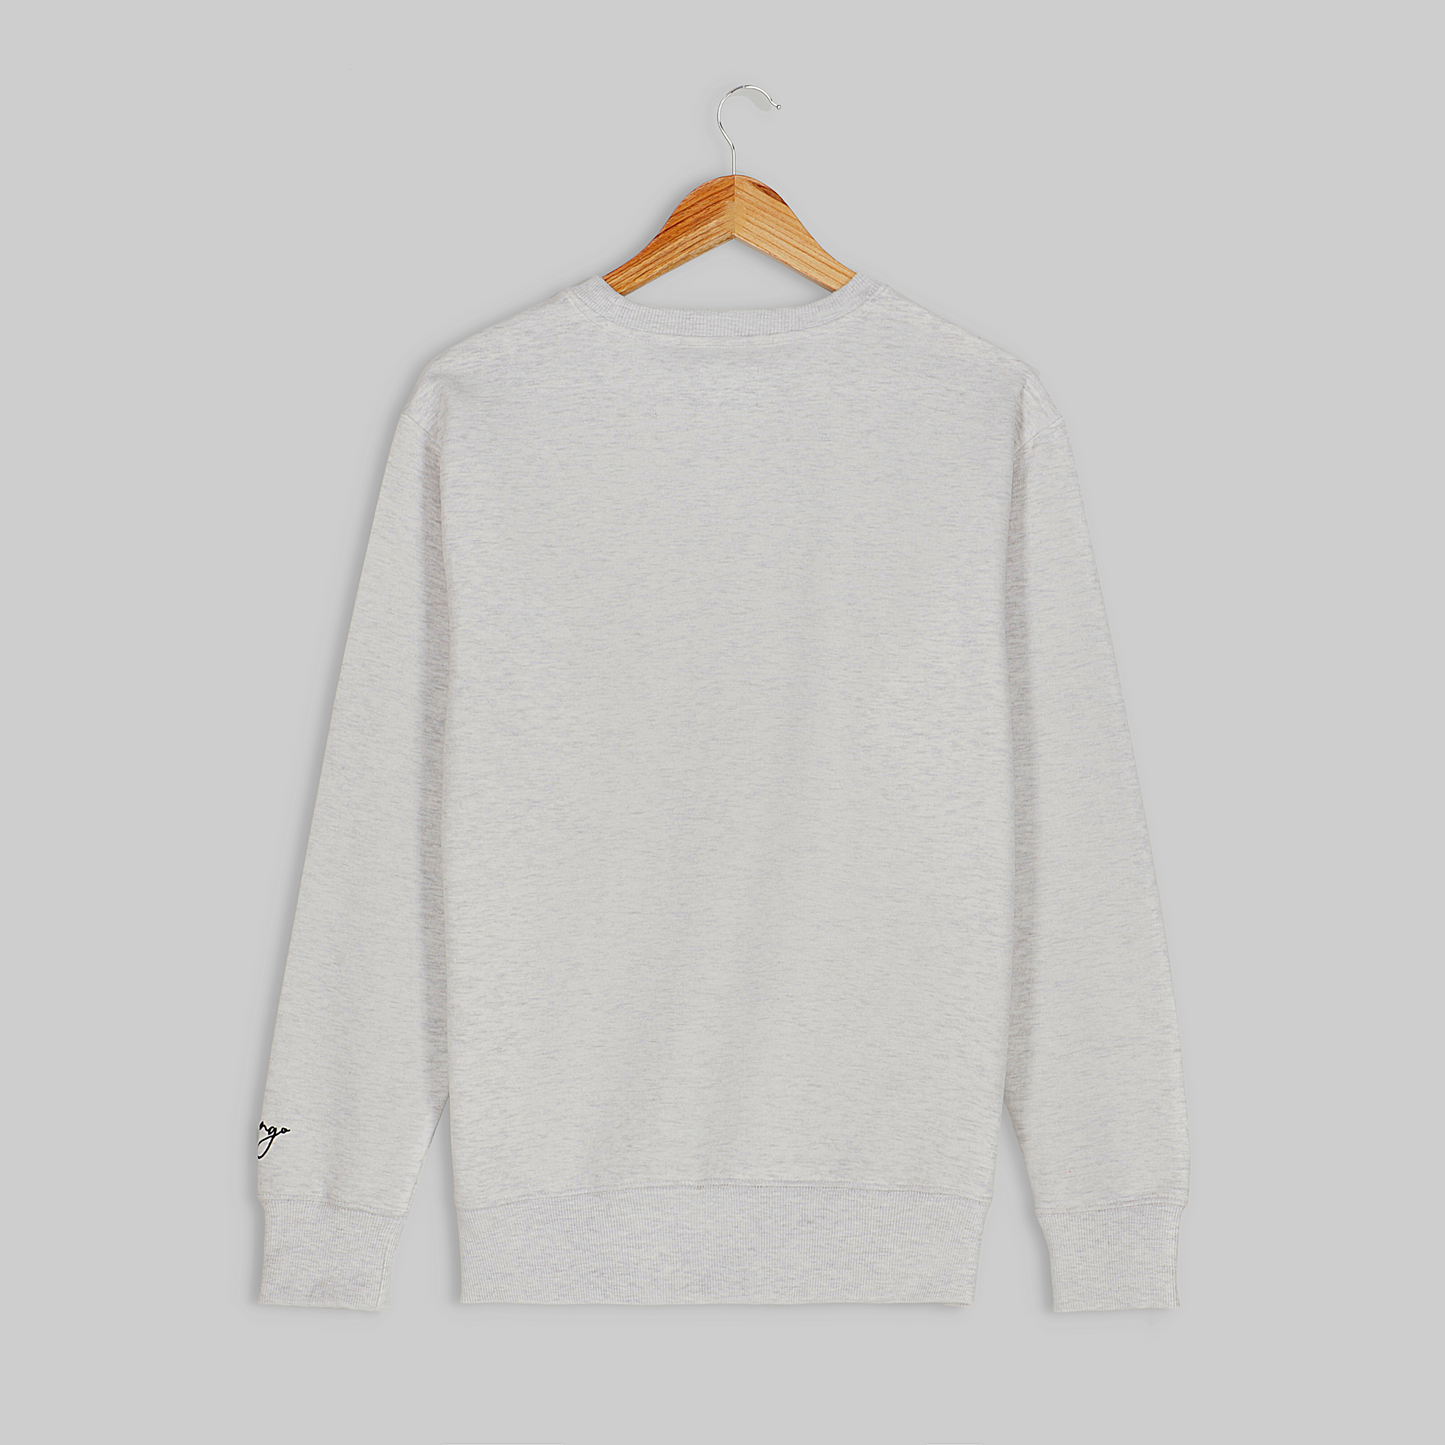 Polarbear Sweatshirt - White Melange